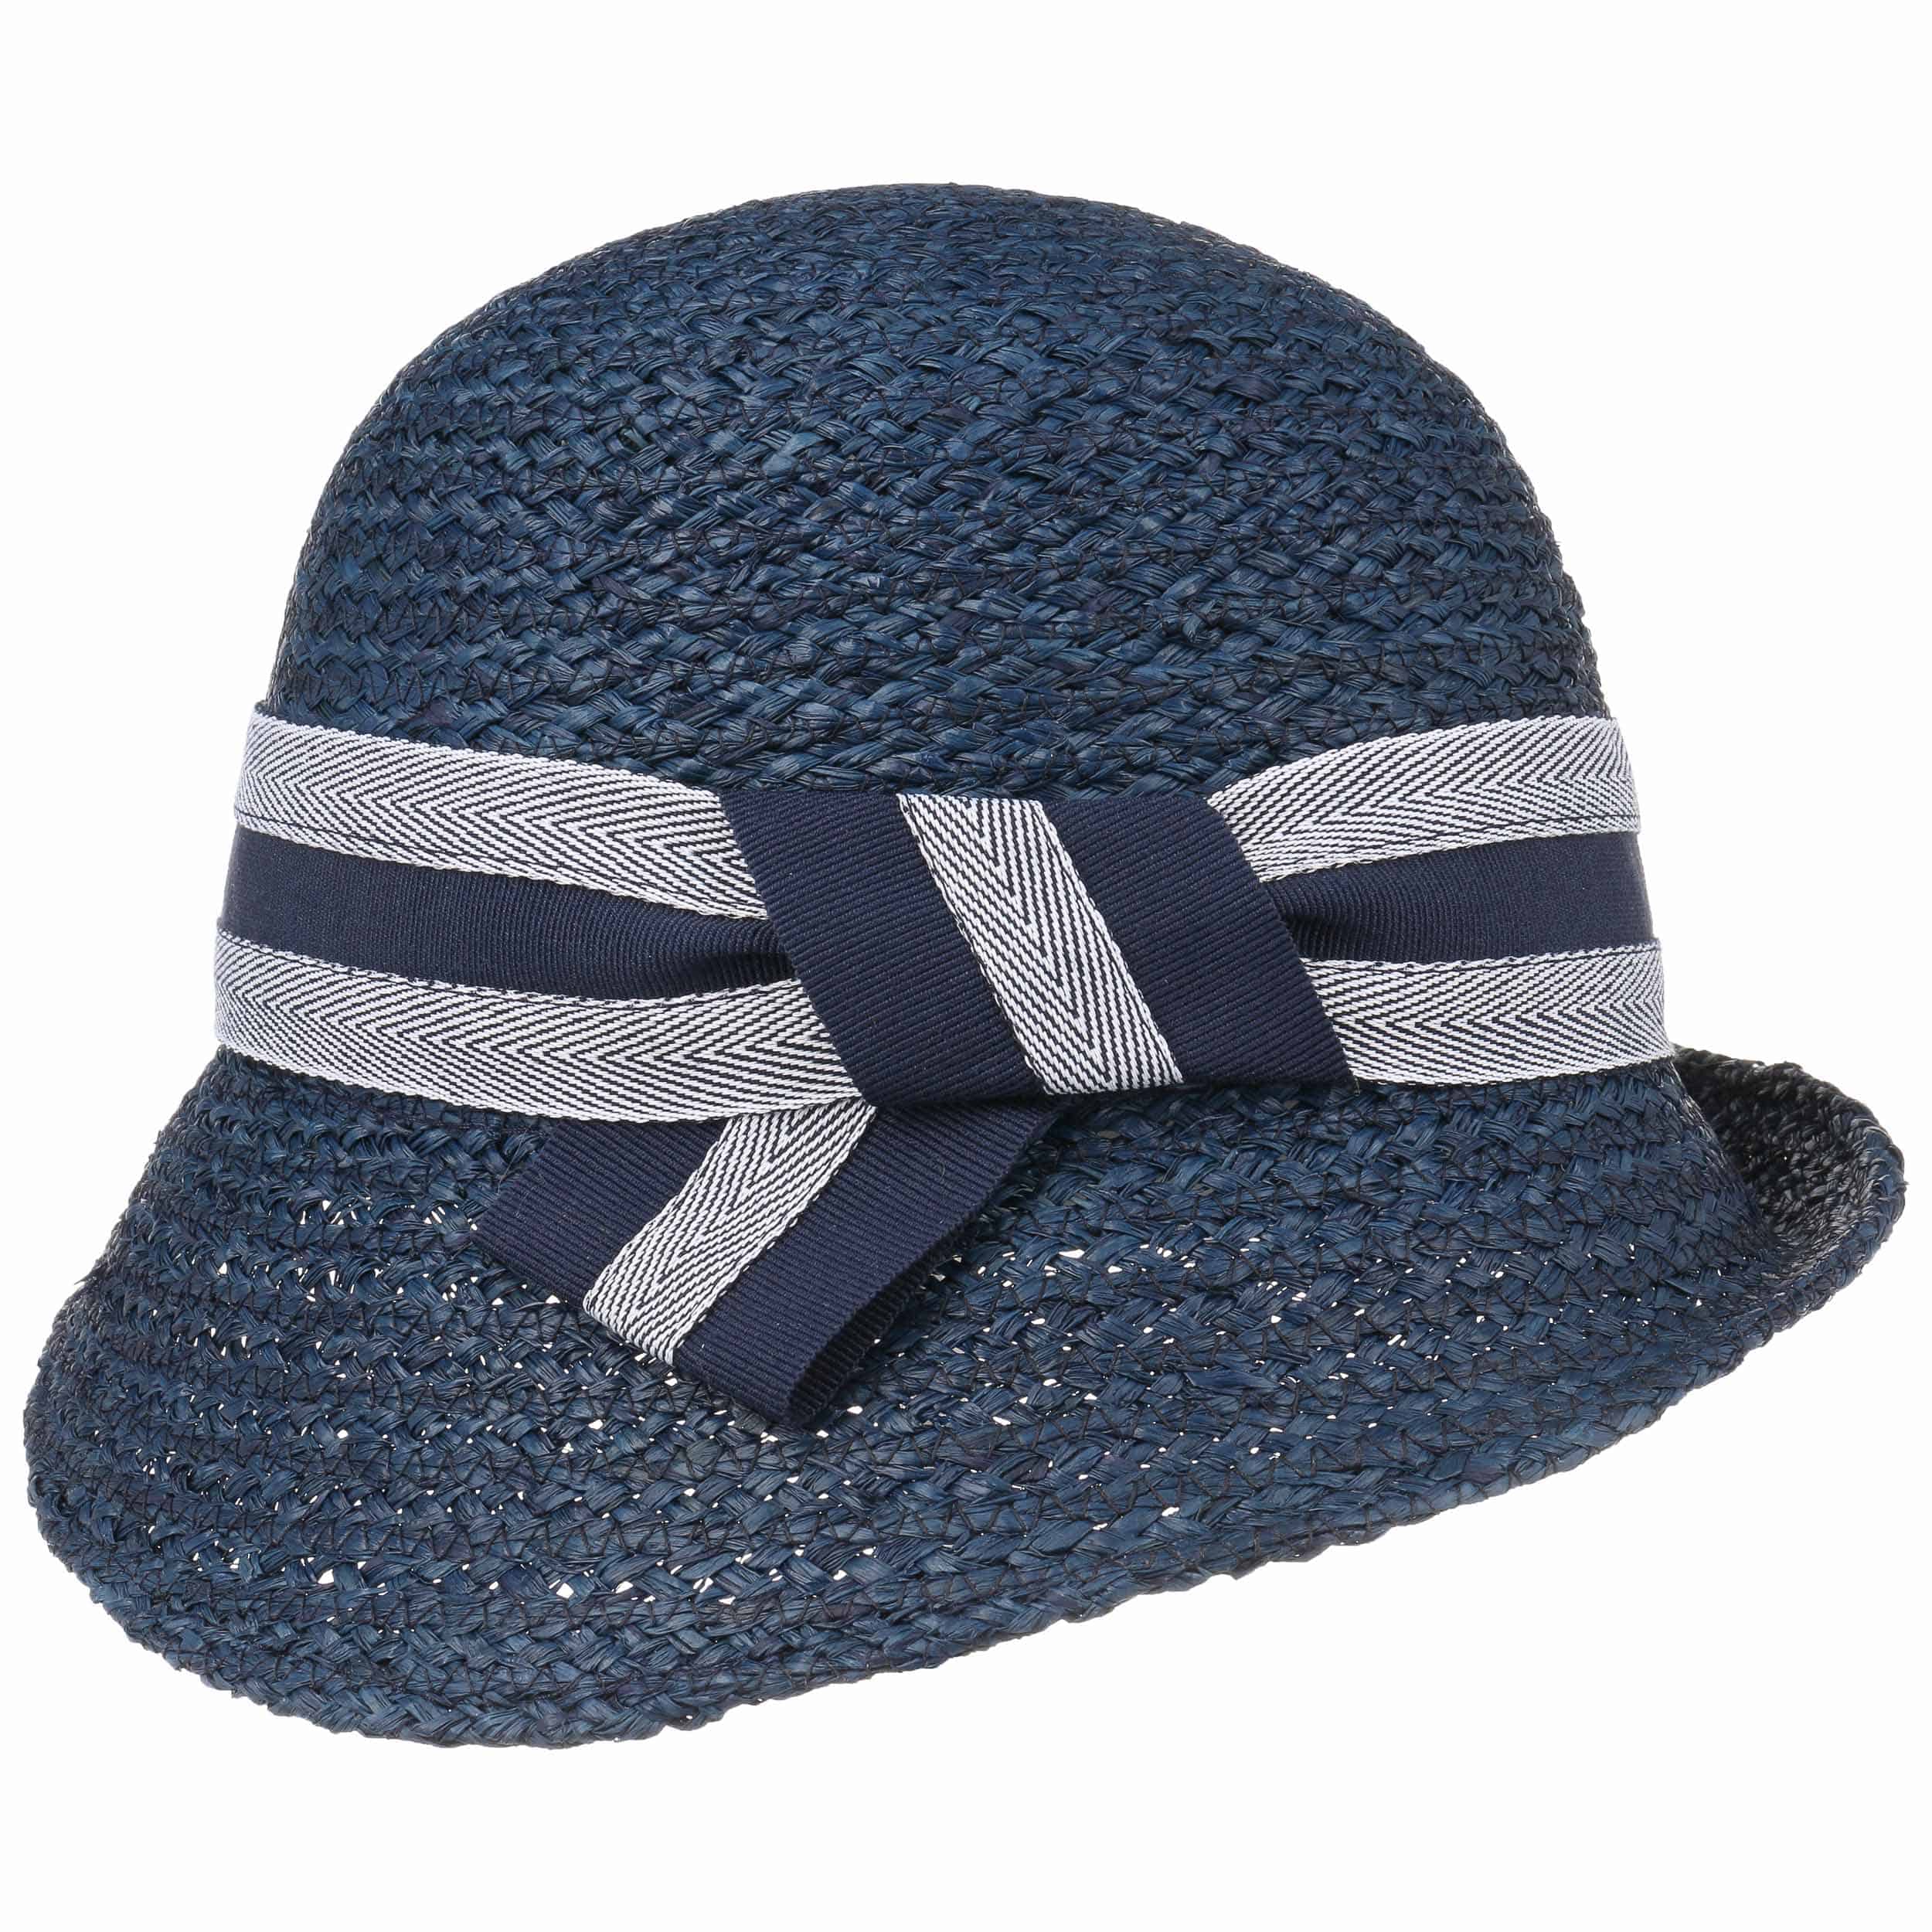 Straw Cloche Raffia Hat by bedacht - 72,95 €